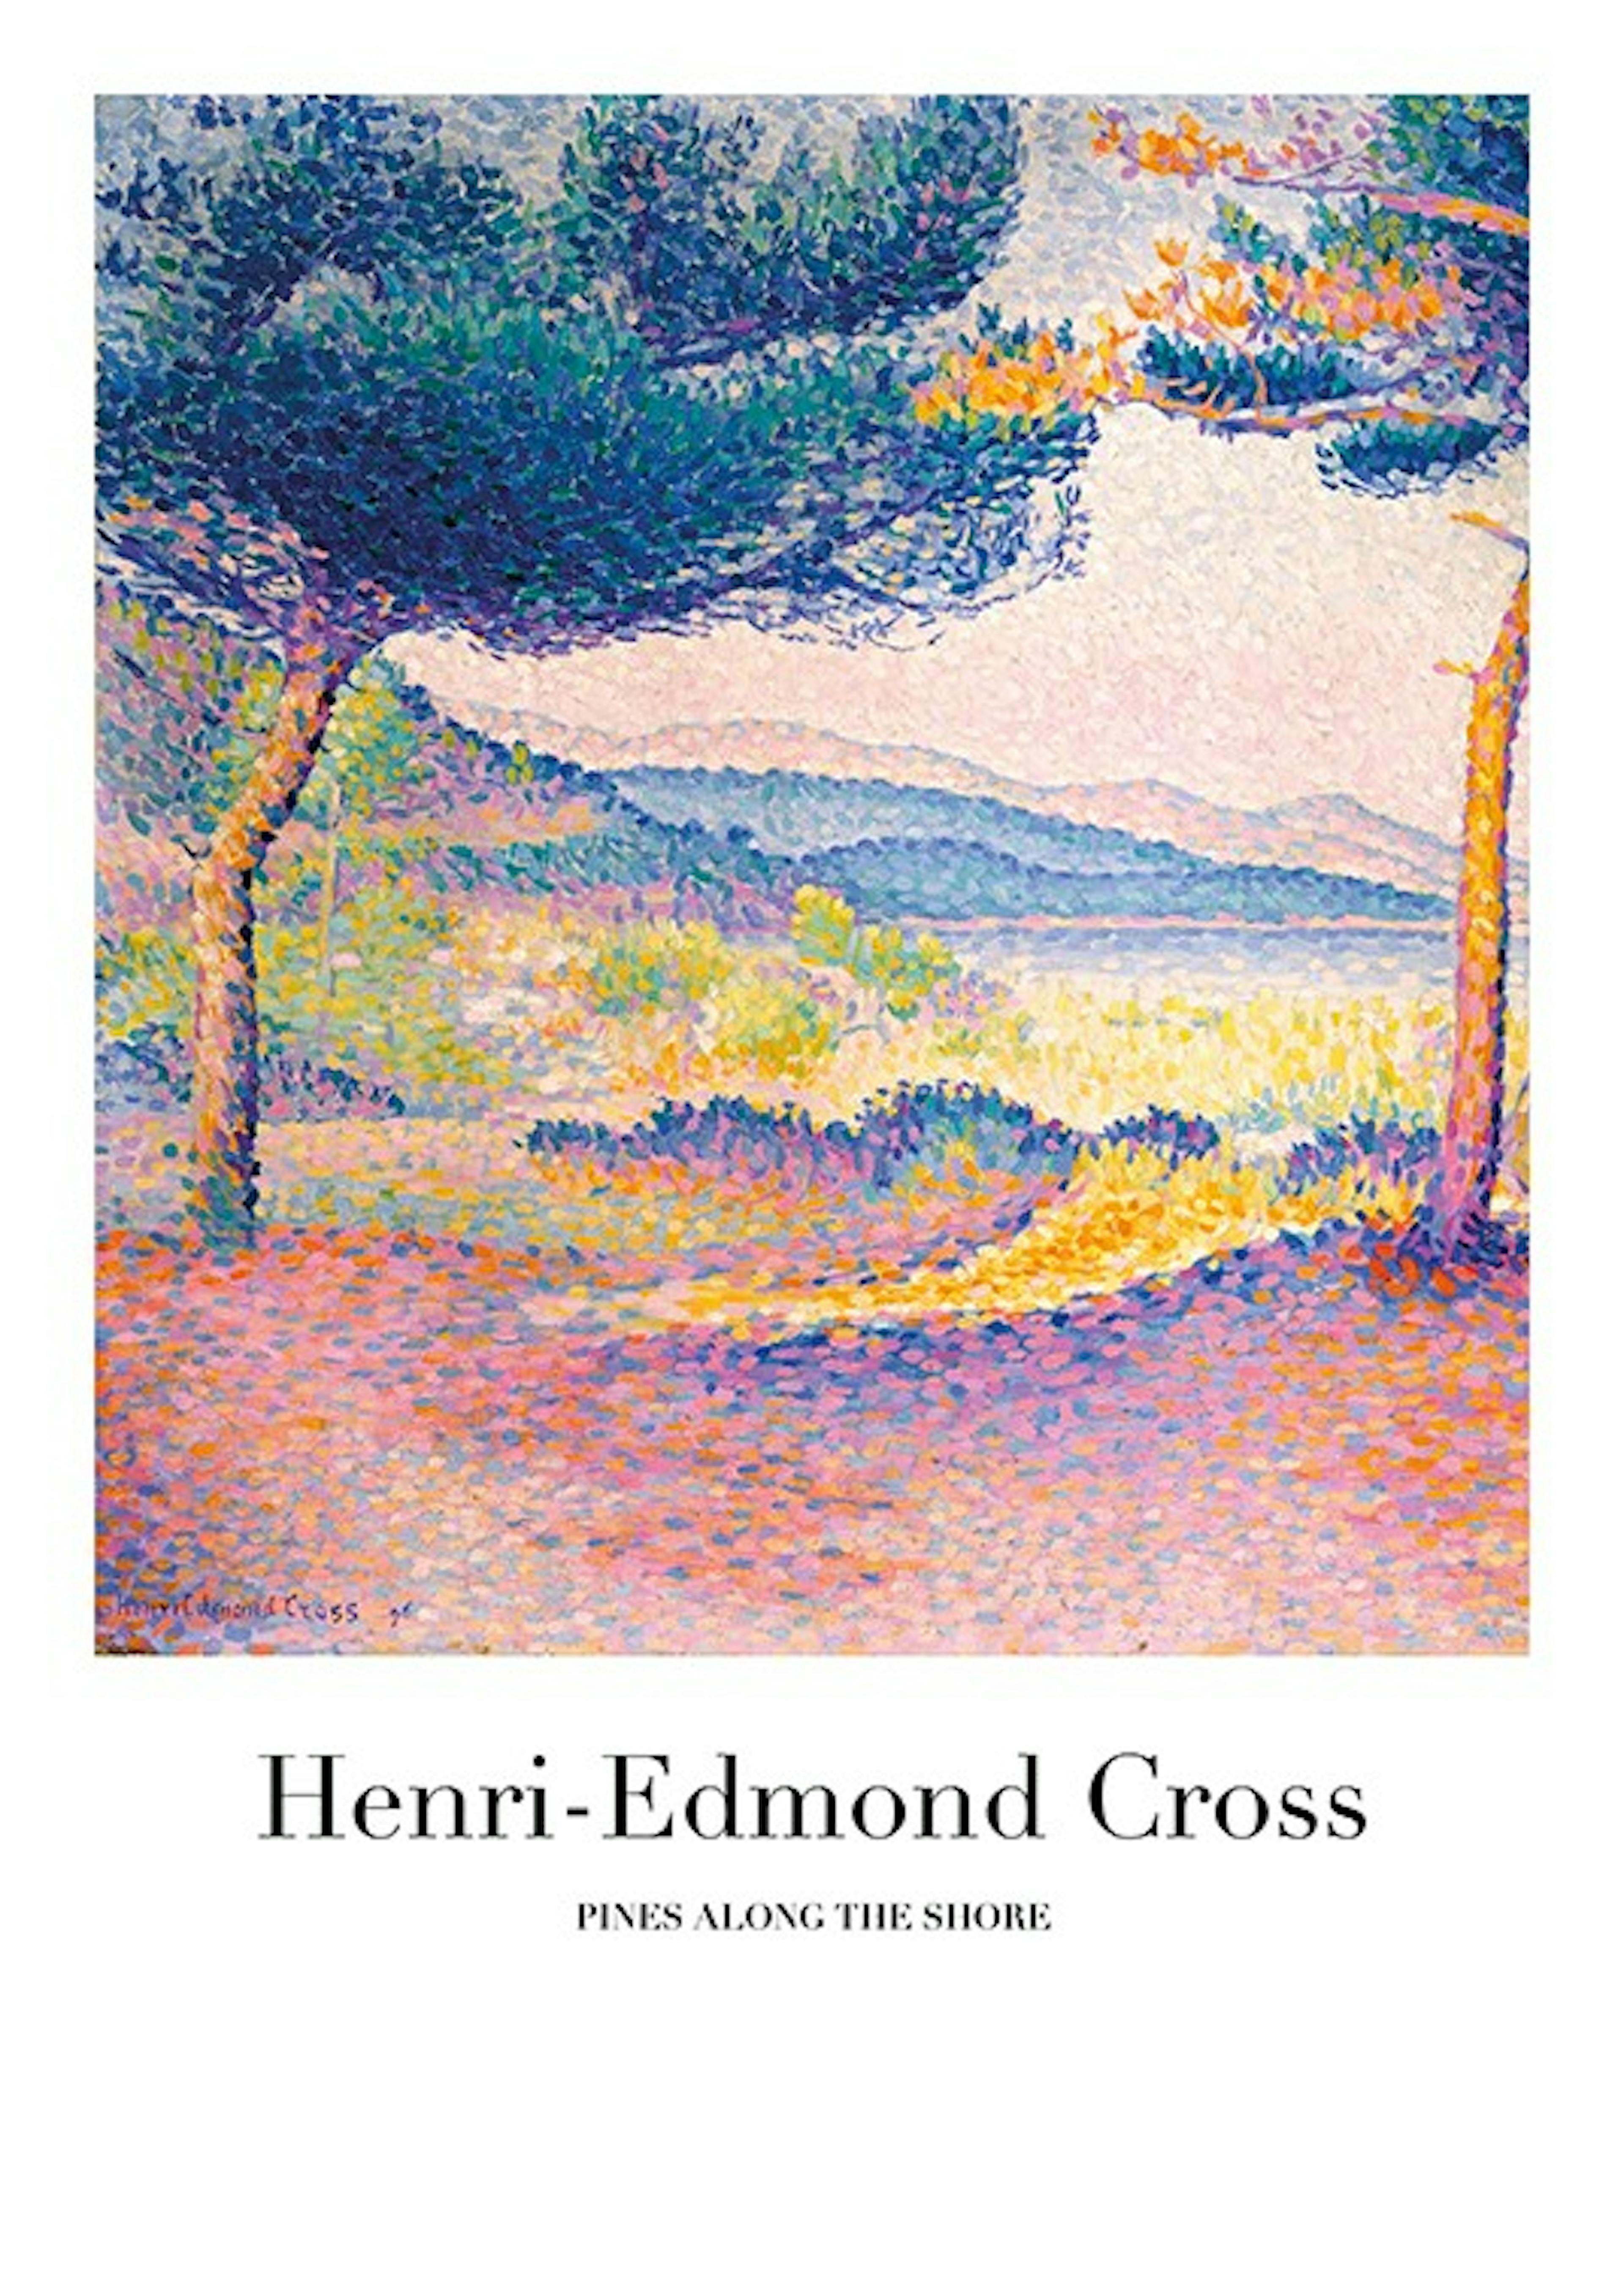 Henri-Edmond Cross - Pines Along the Shore Print 0